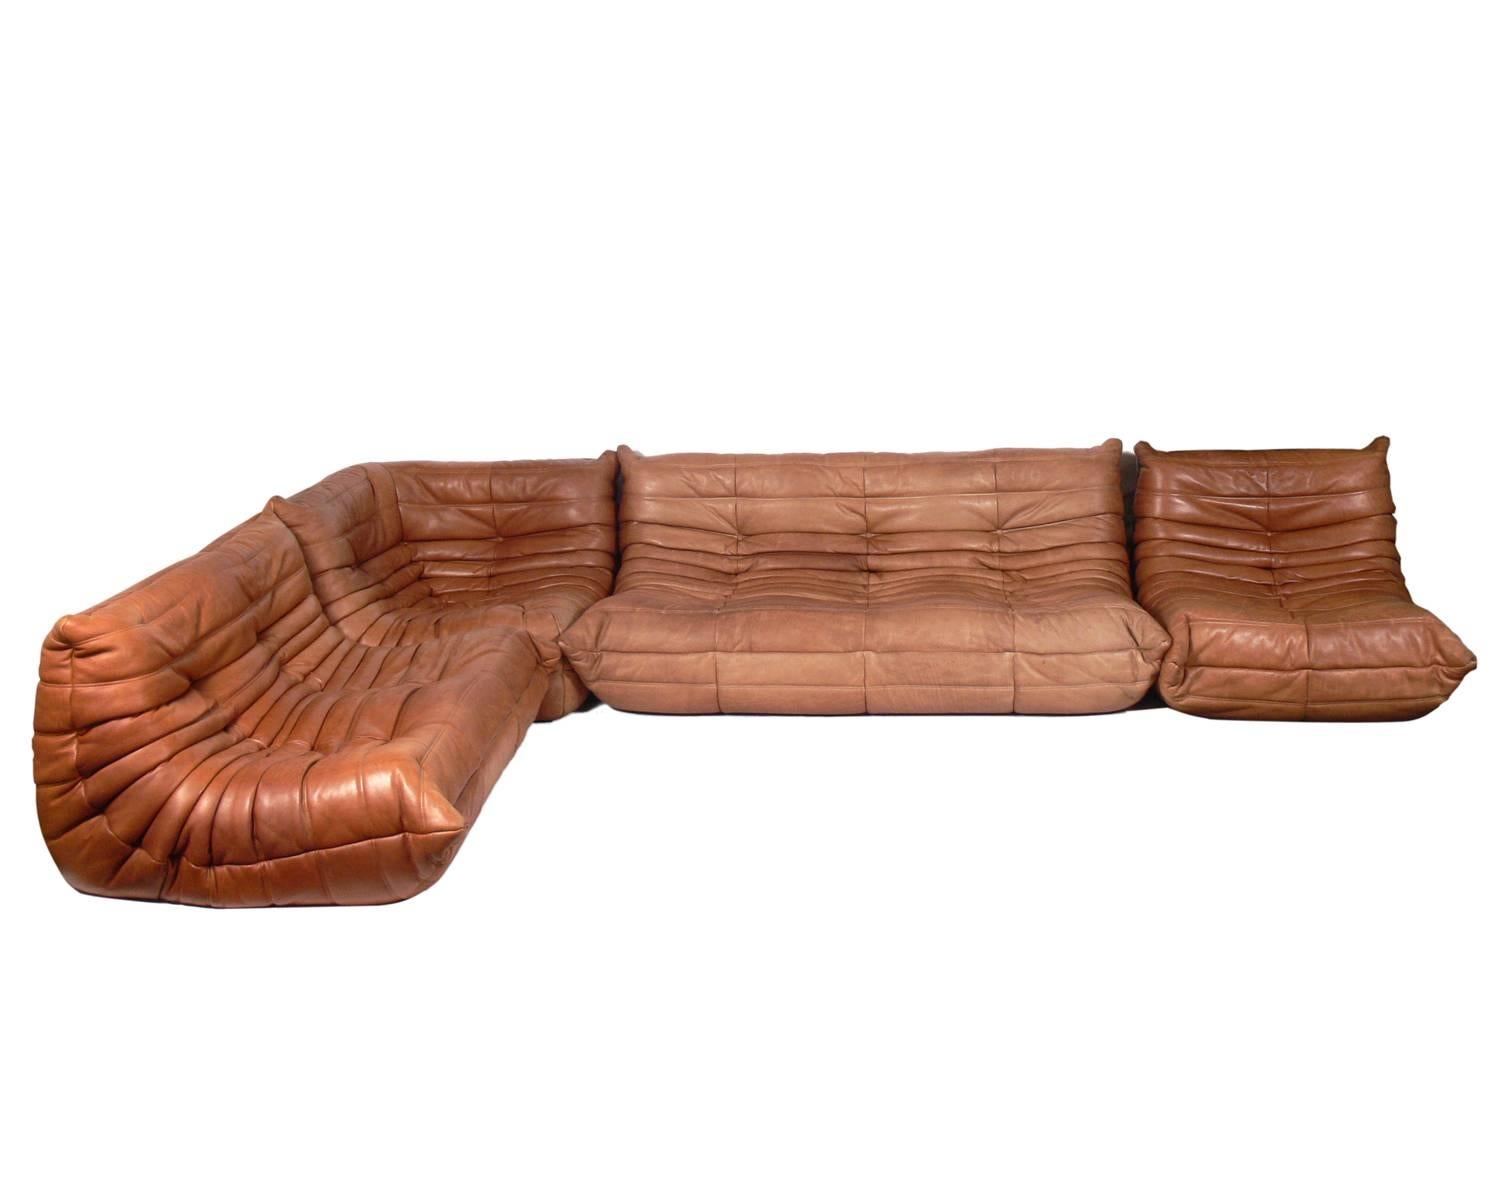 Sculptural leather Togo sofa by Michel Ducaroy for Ligne Roset.